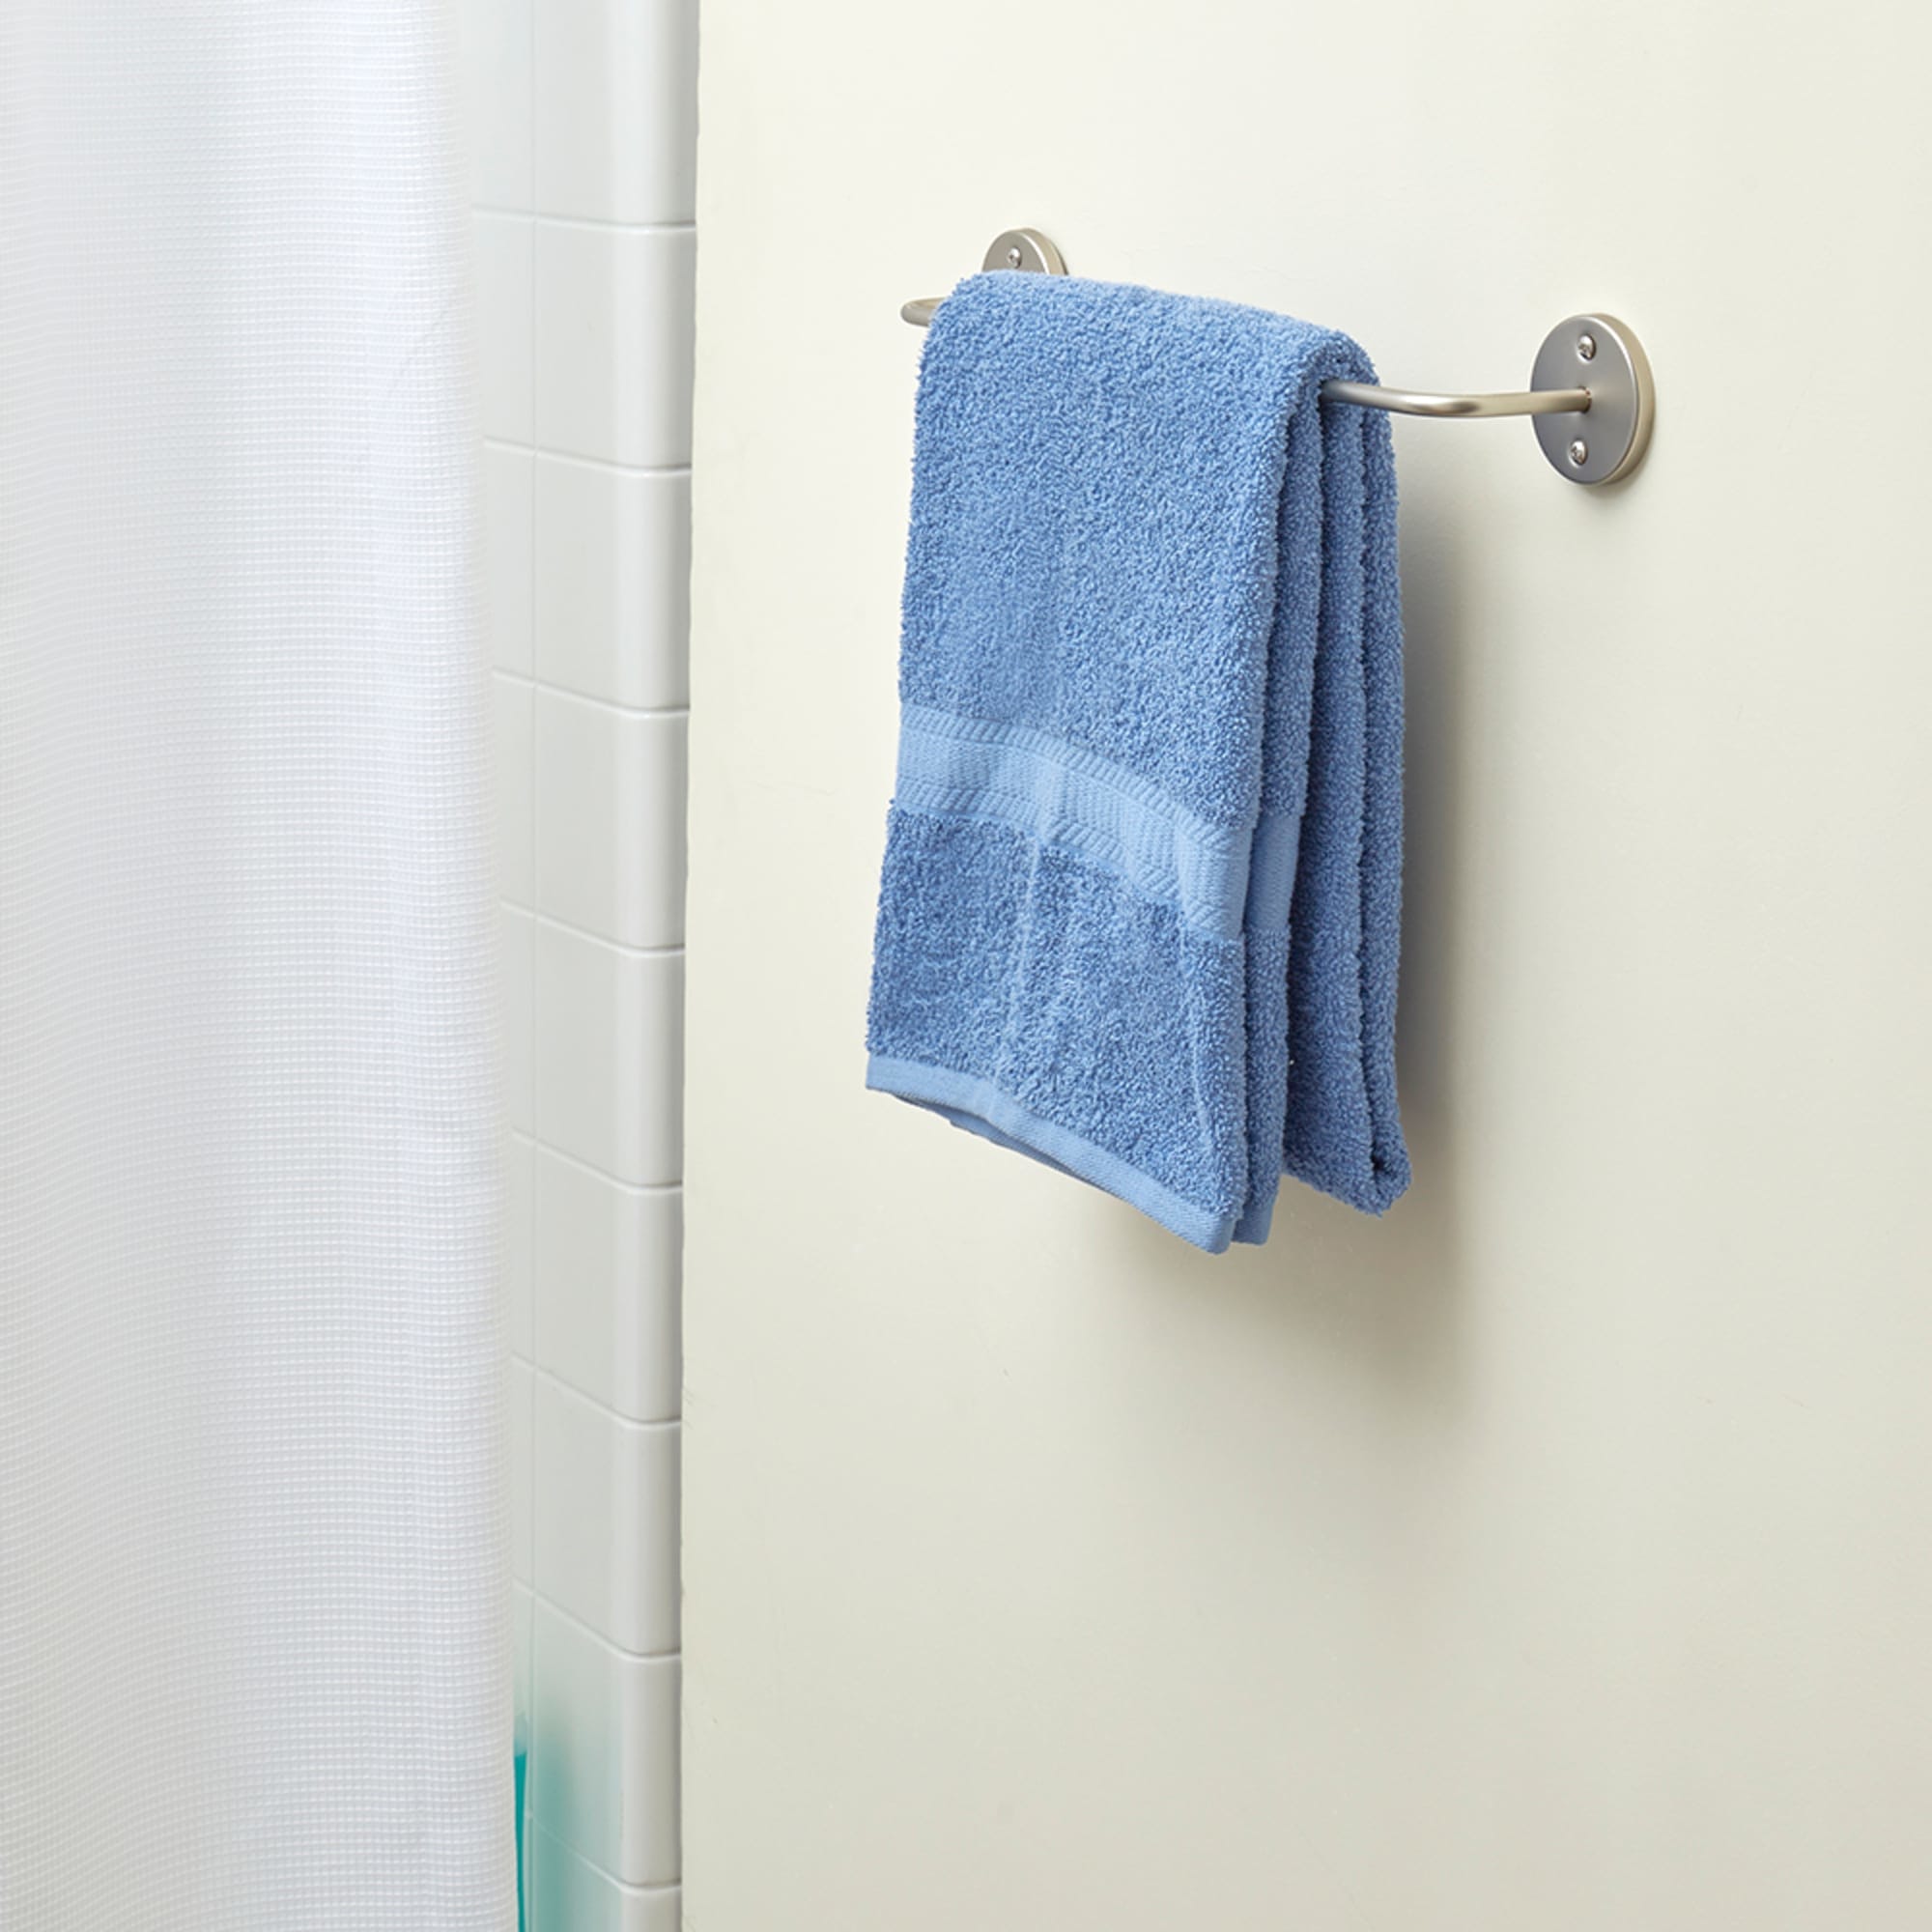 Home Basics Chelsea 18-inch Towel Bar $5.00 EACH, CASE PACK OF 12